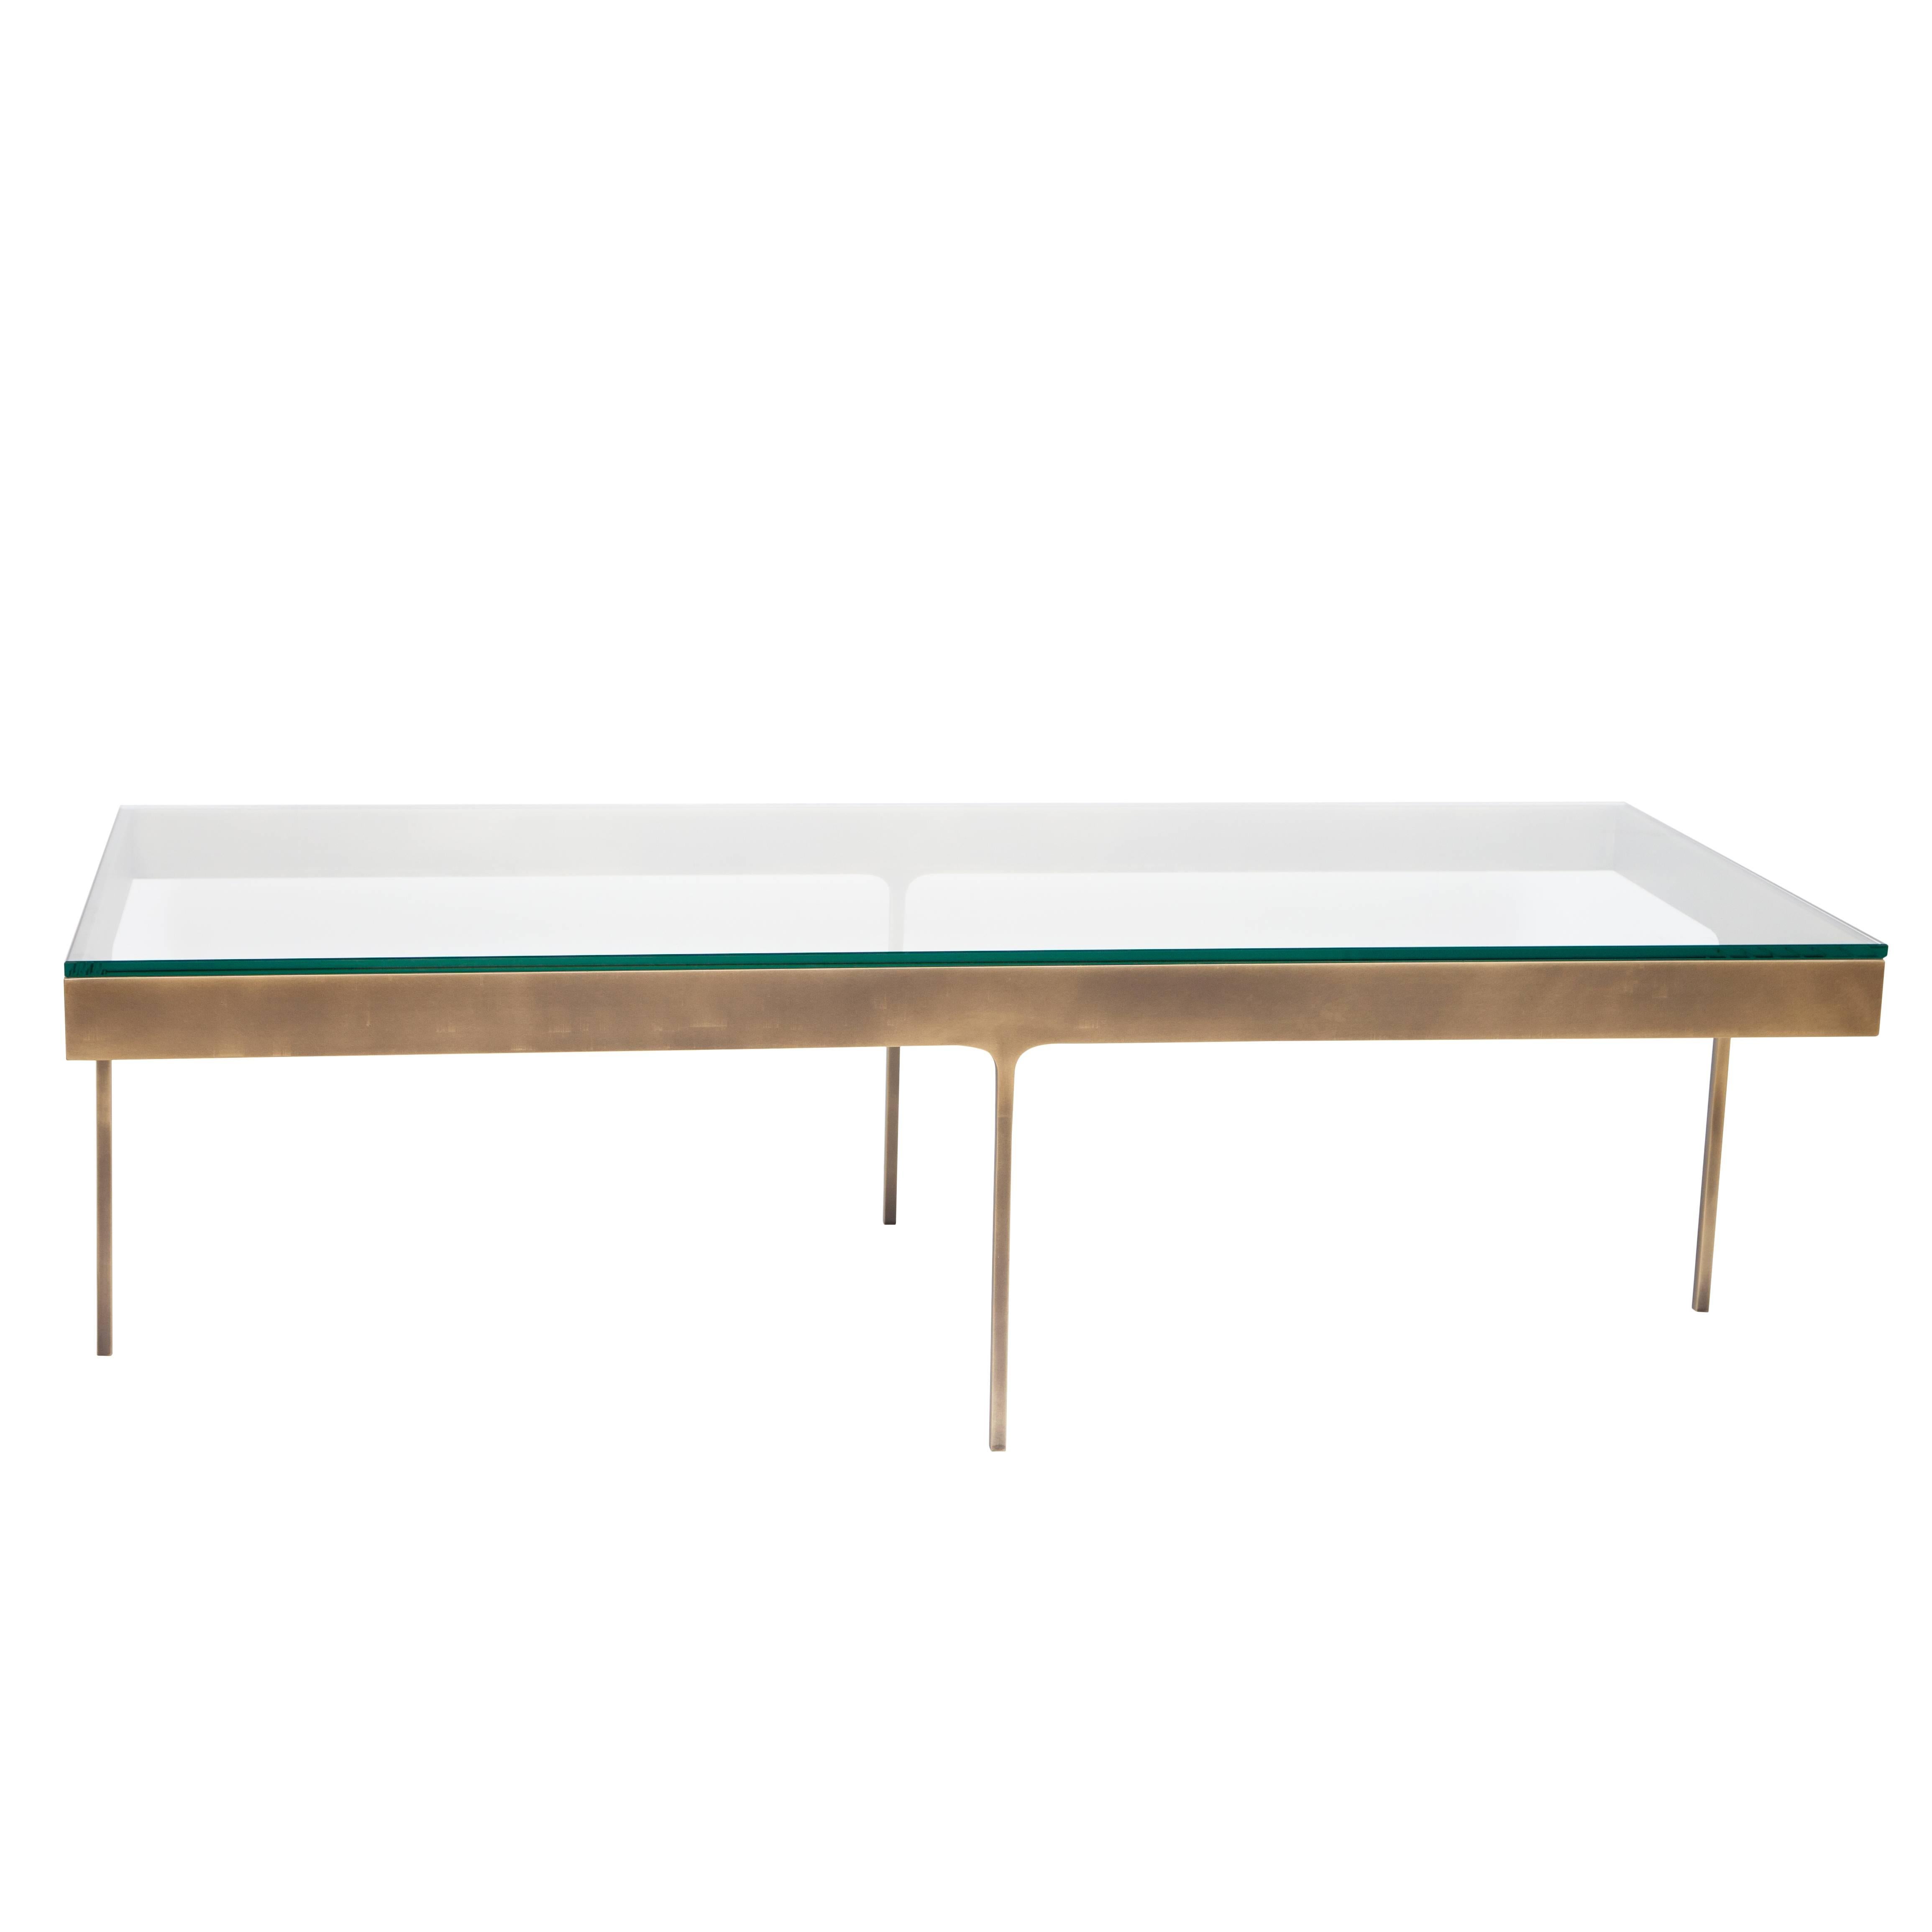 American Haworth Rectangular Table For Sale